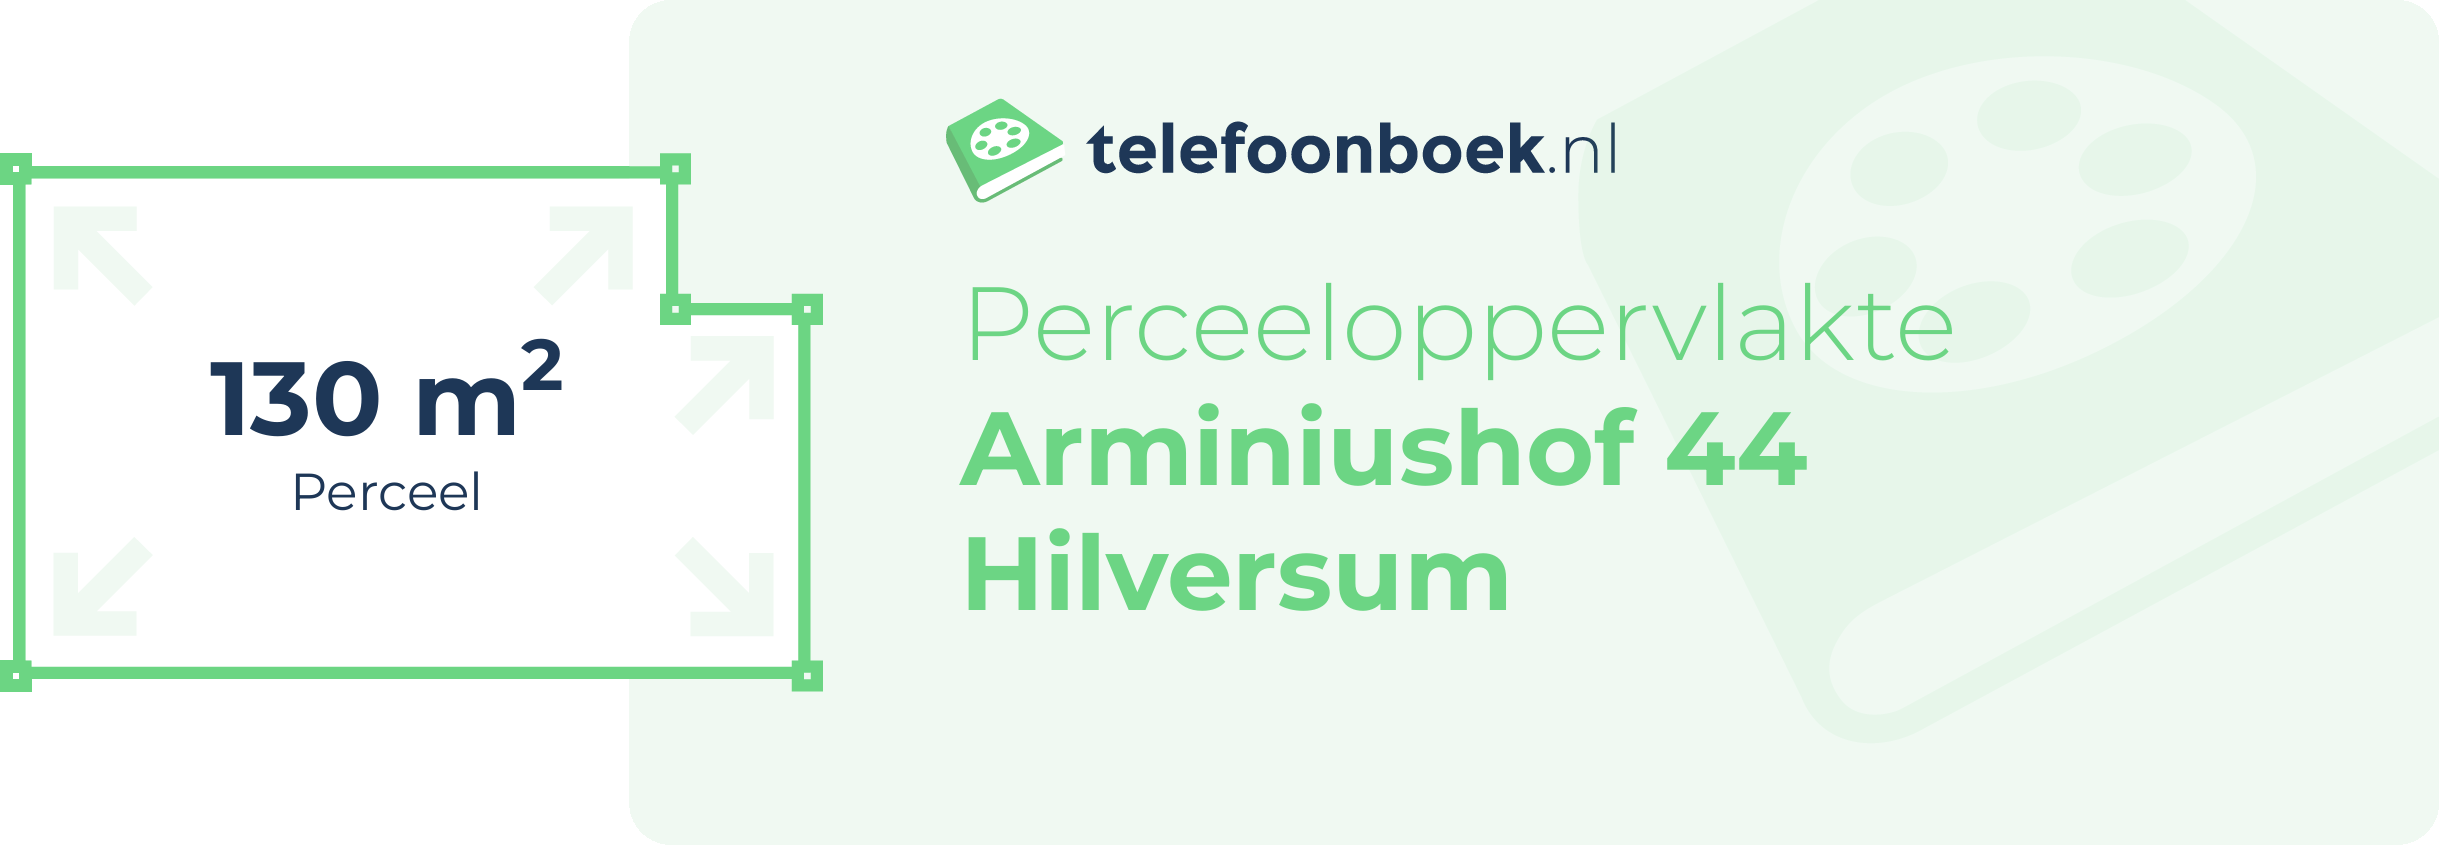 Perceeloppervlakte Arminiushof 44 Hilversum